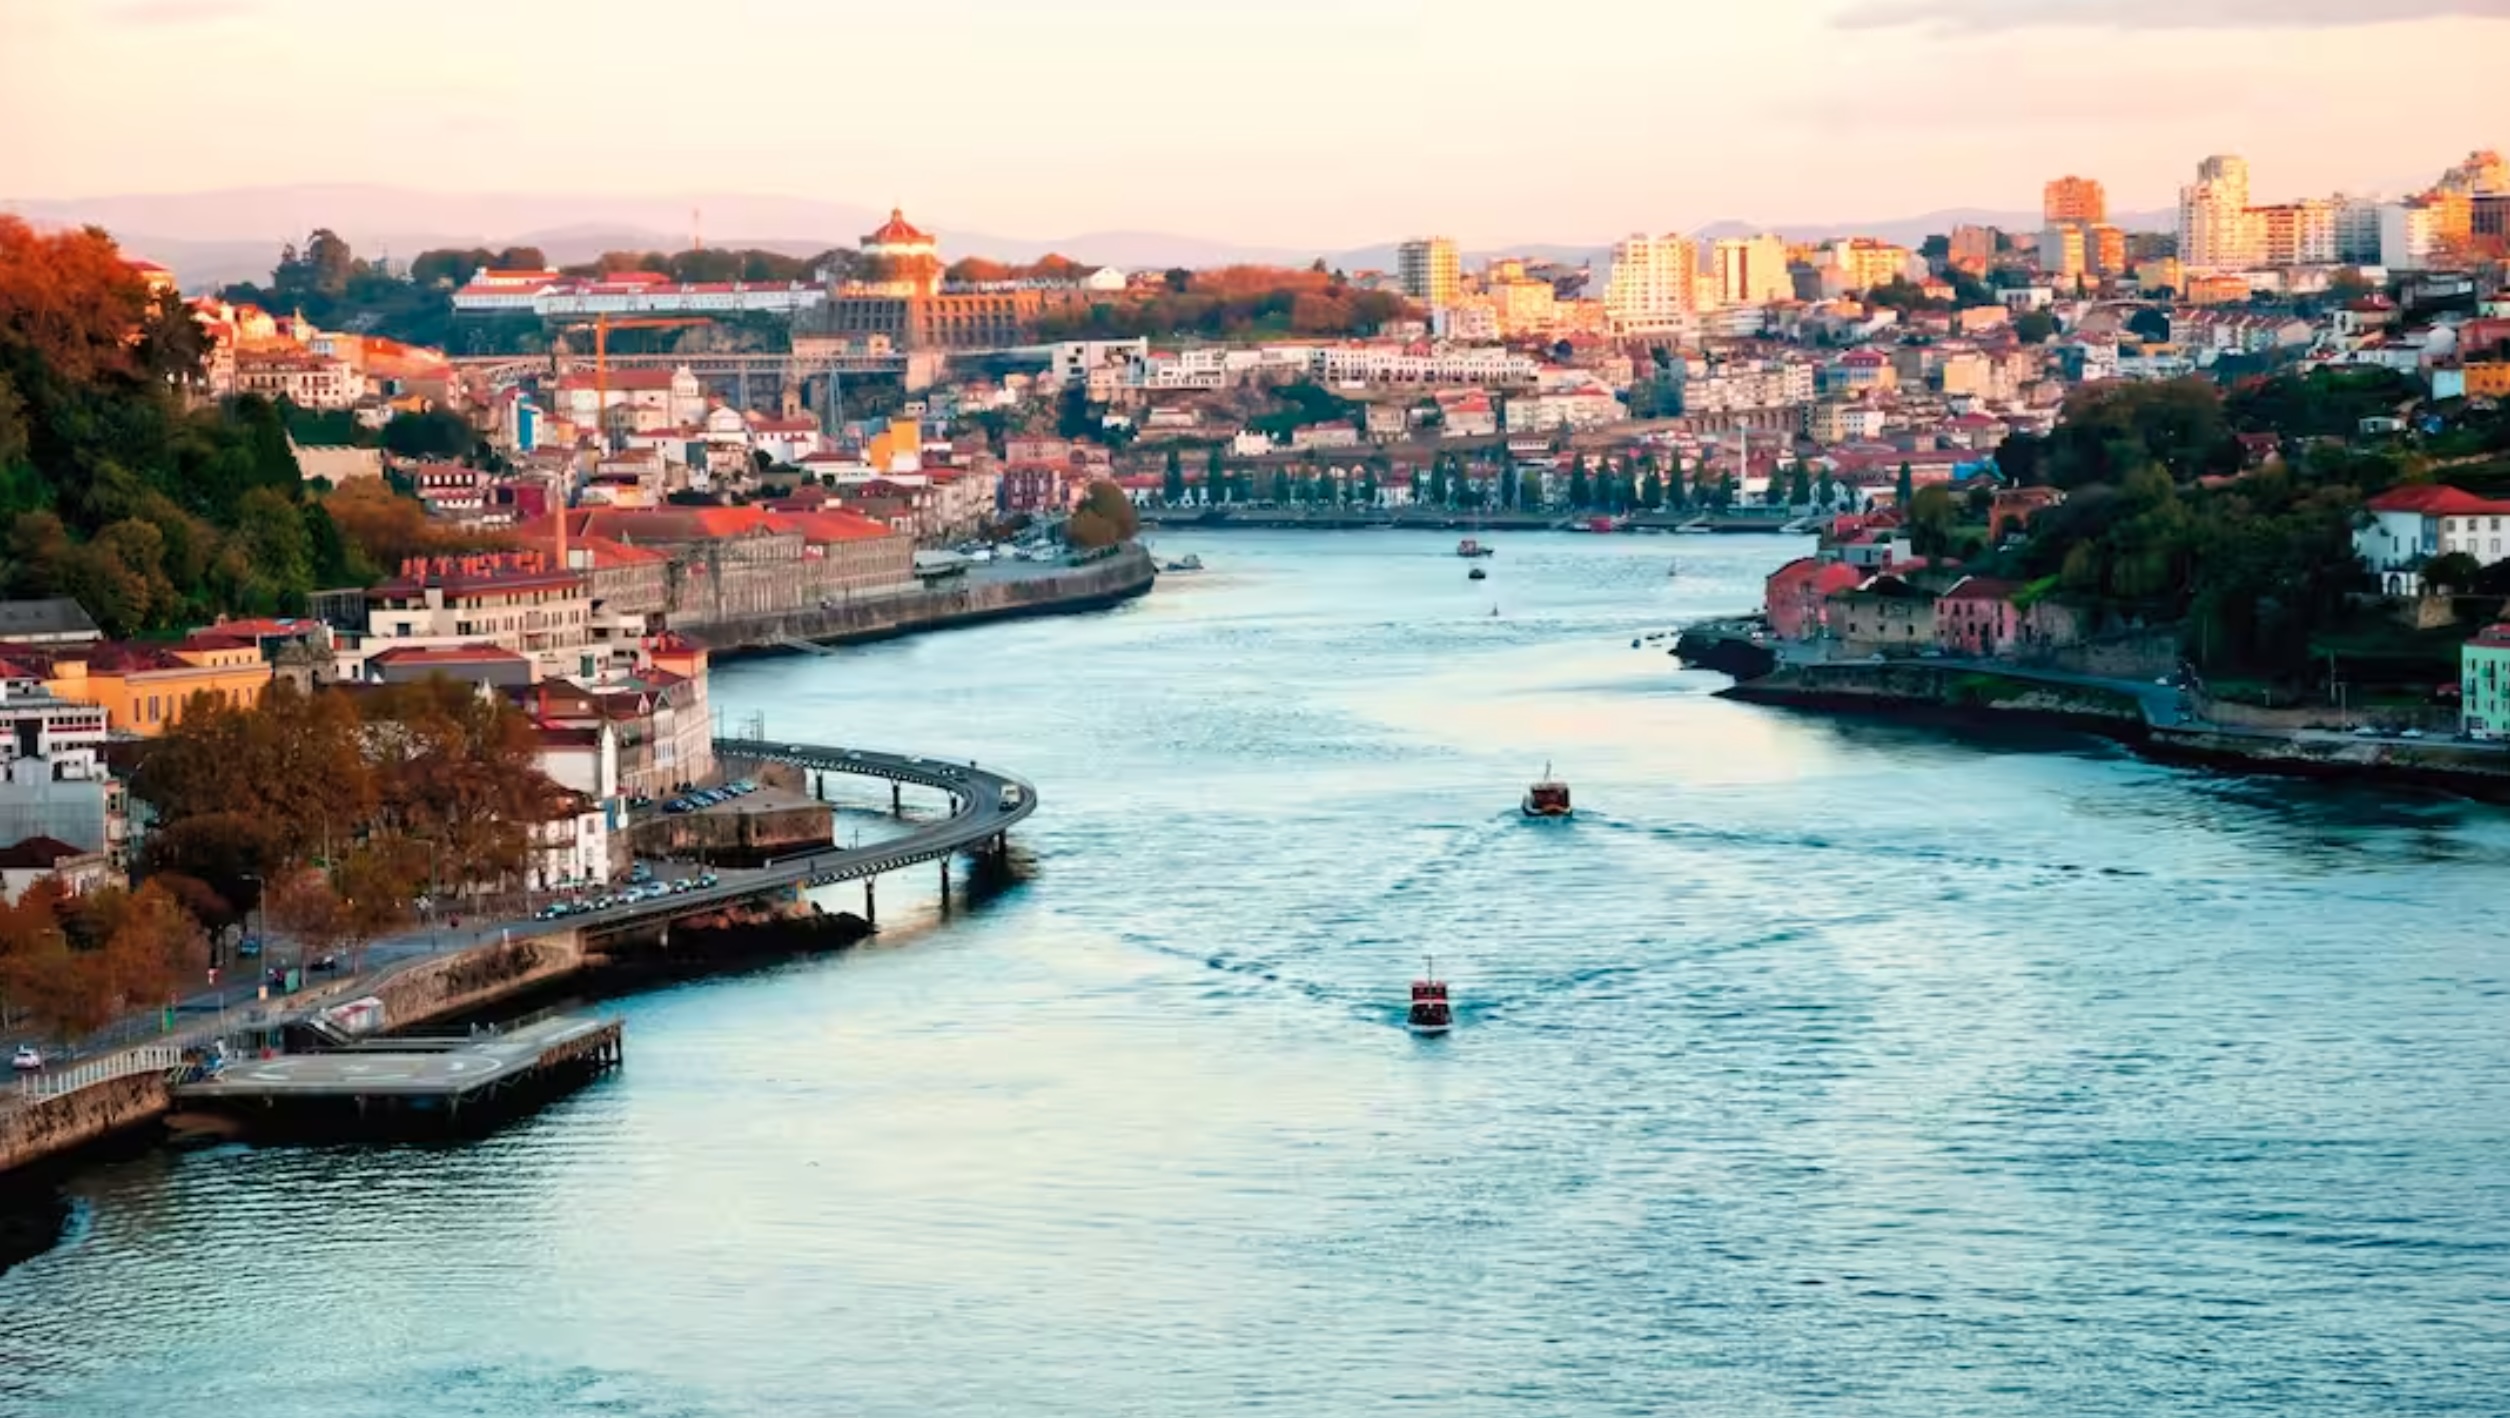 View down the Douro river to Porto city